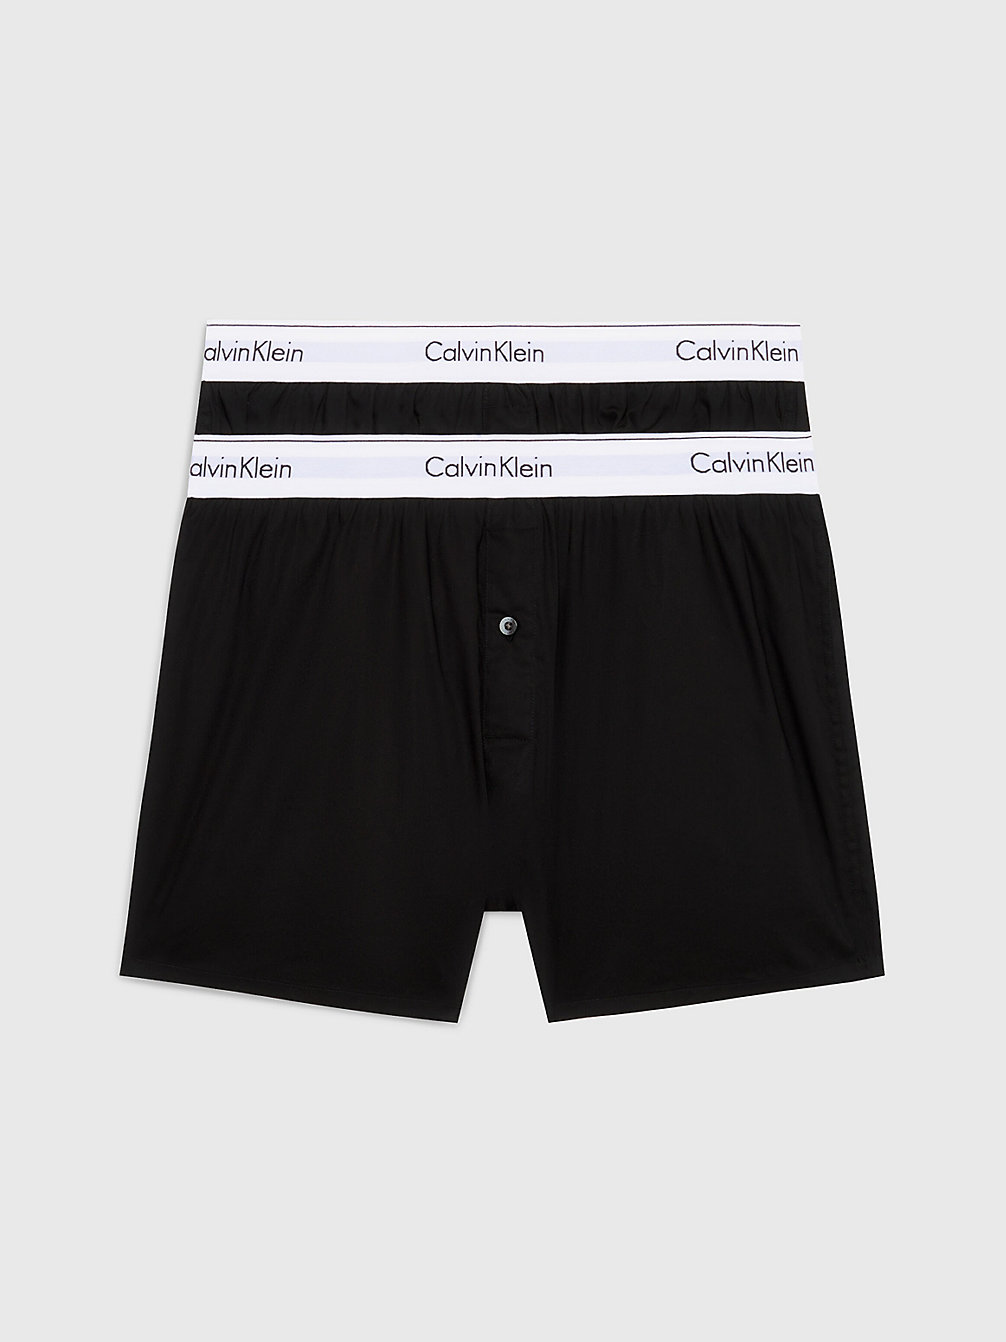 BLACK / BLACK 2er-Pack Slim Fit Boxershorts - Modern Cotton undefined Herren Calvin Klein